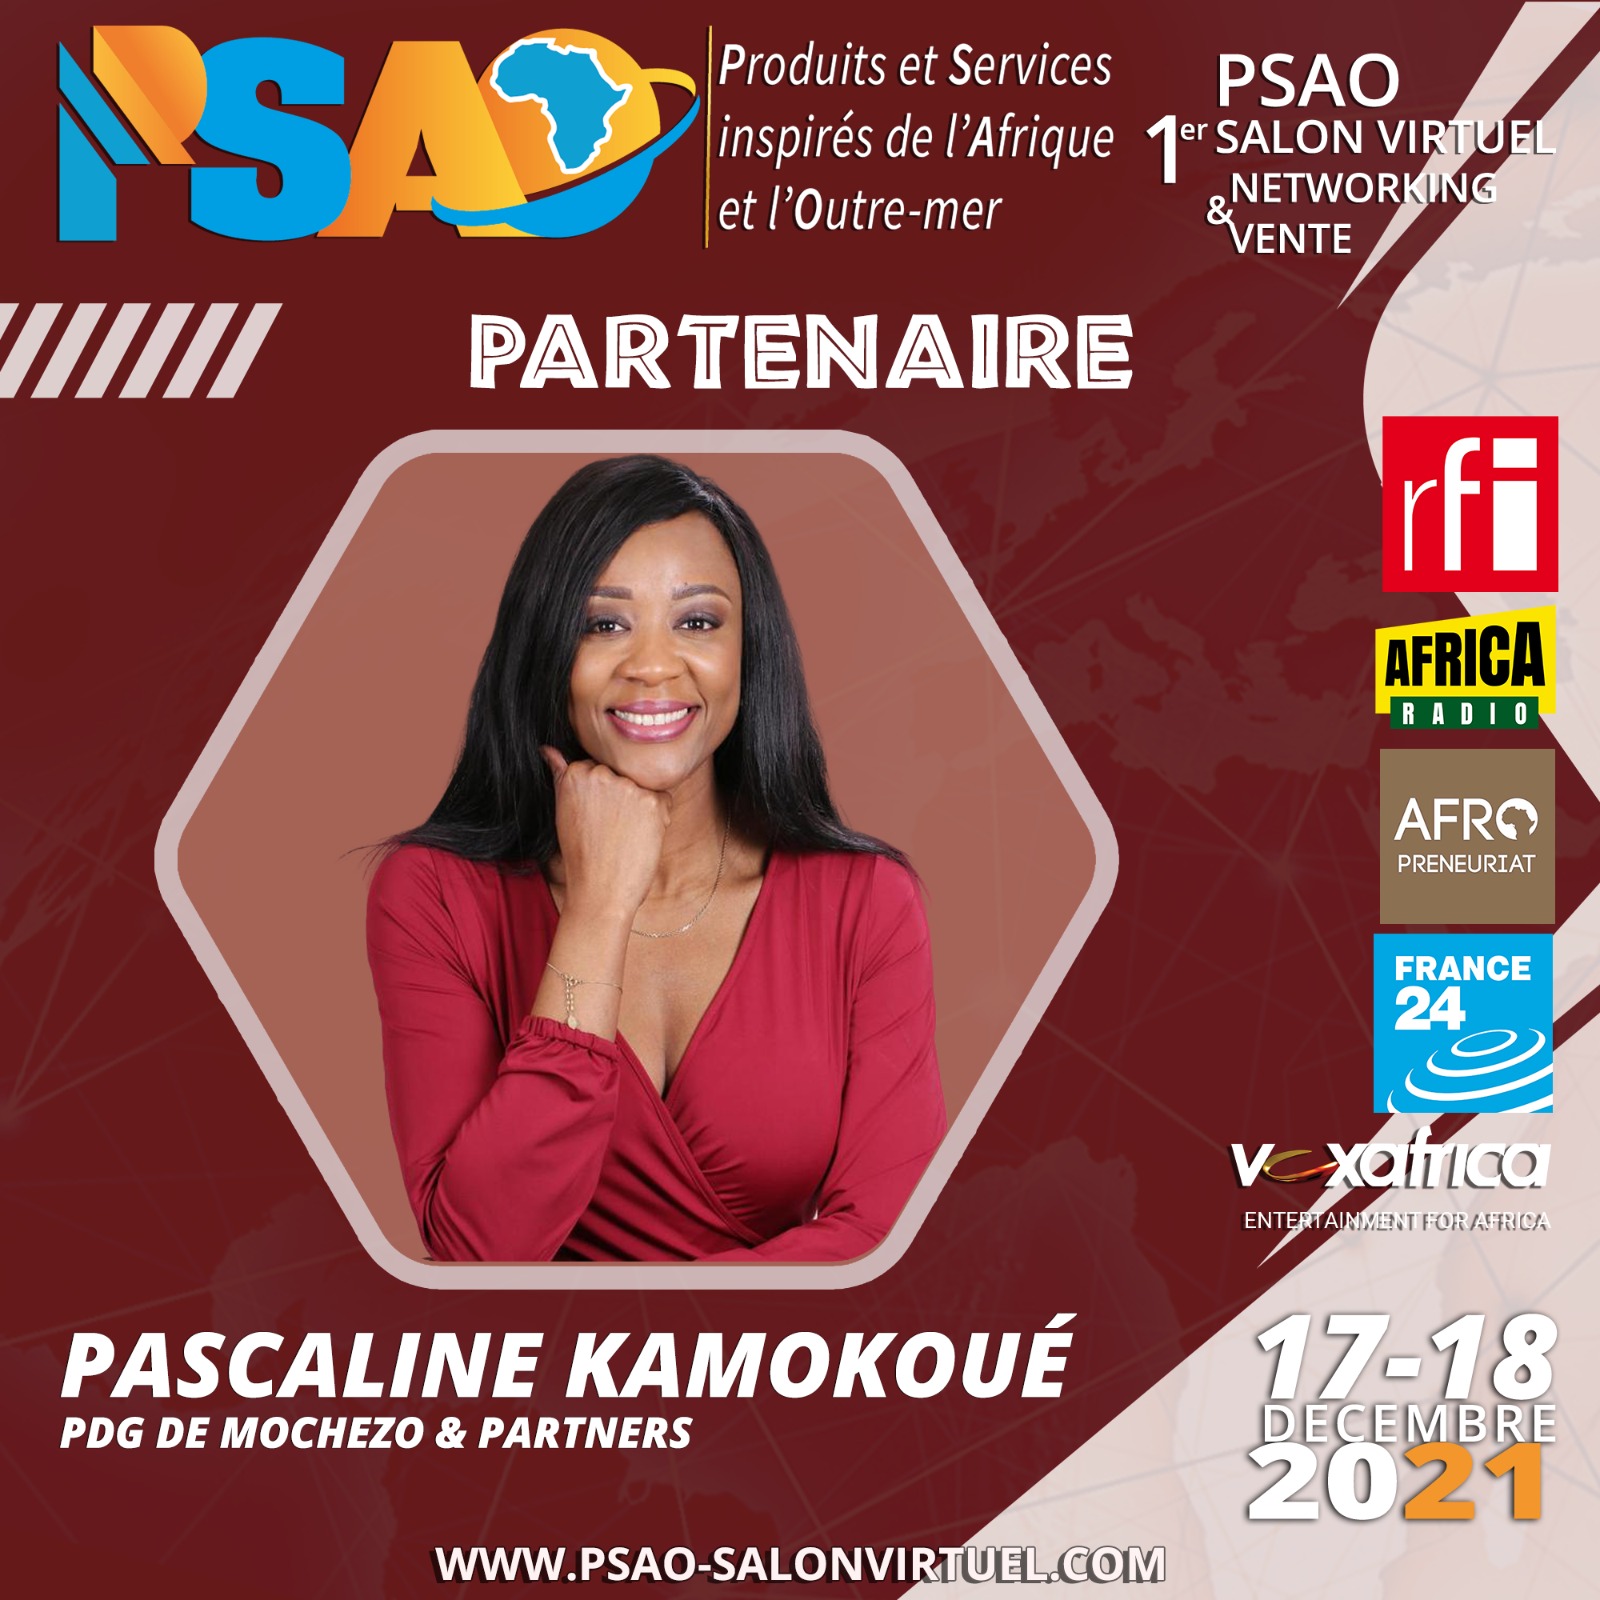 Pascaline KAMOKOUE